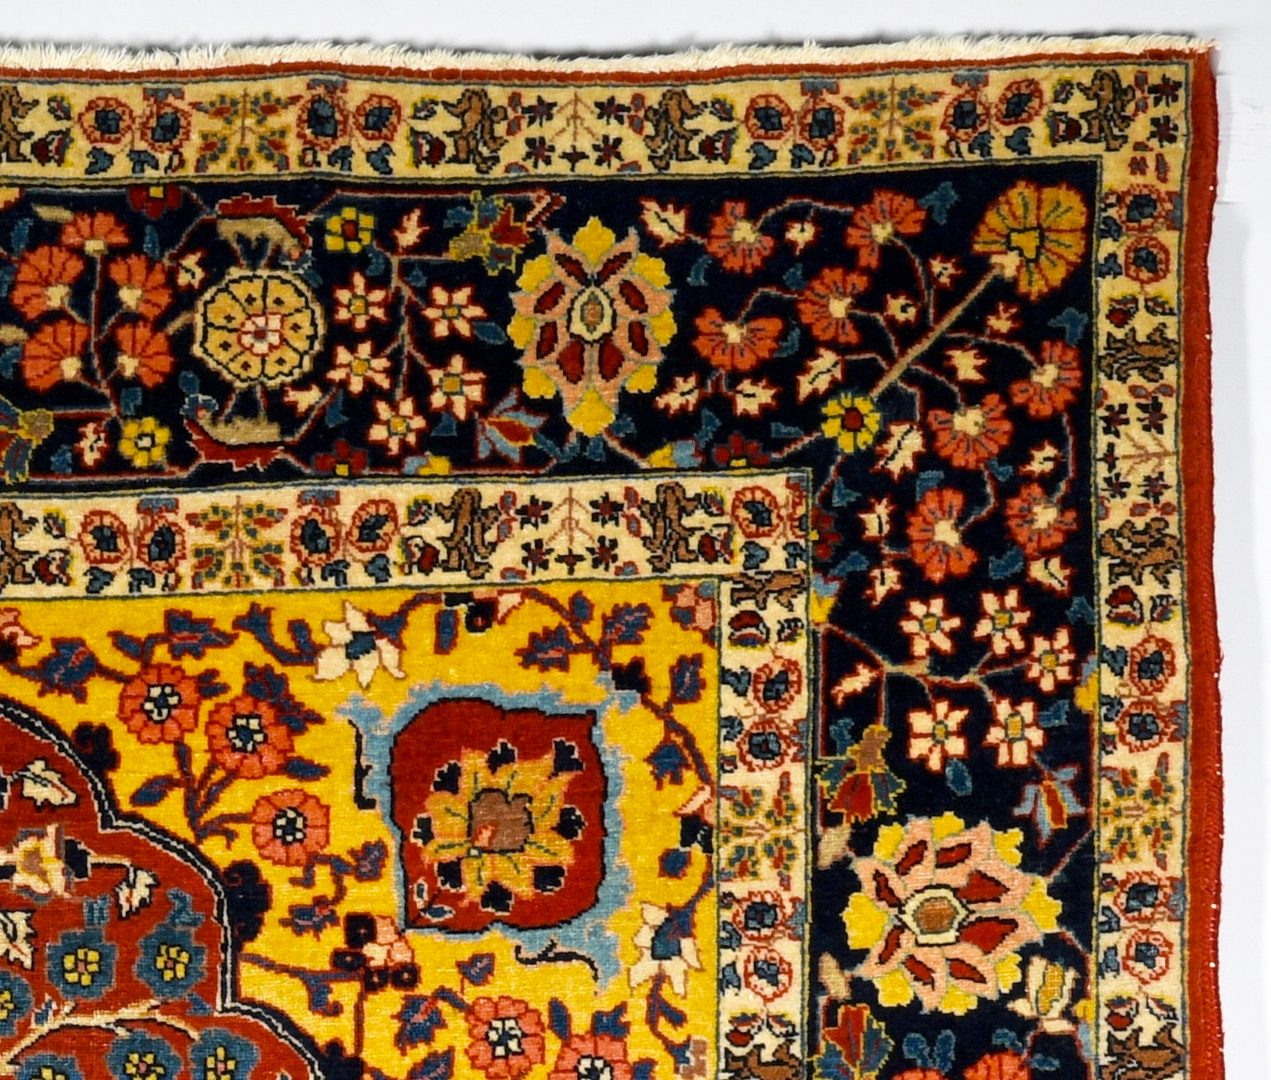 Lot 373: Antique Persian Isphahan rug, 4'6" x 6'5"